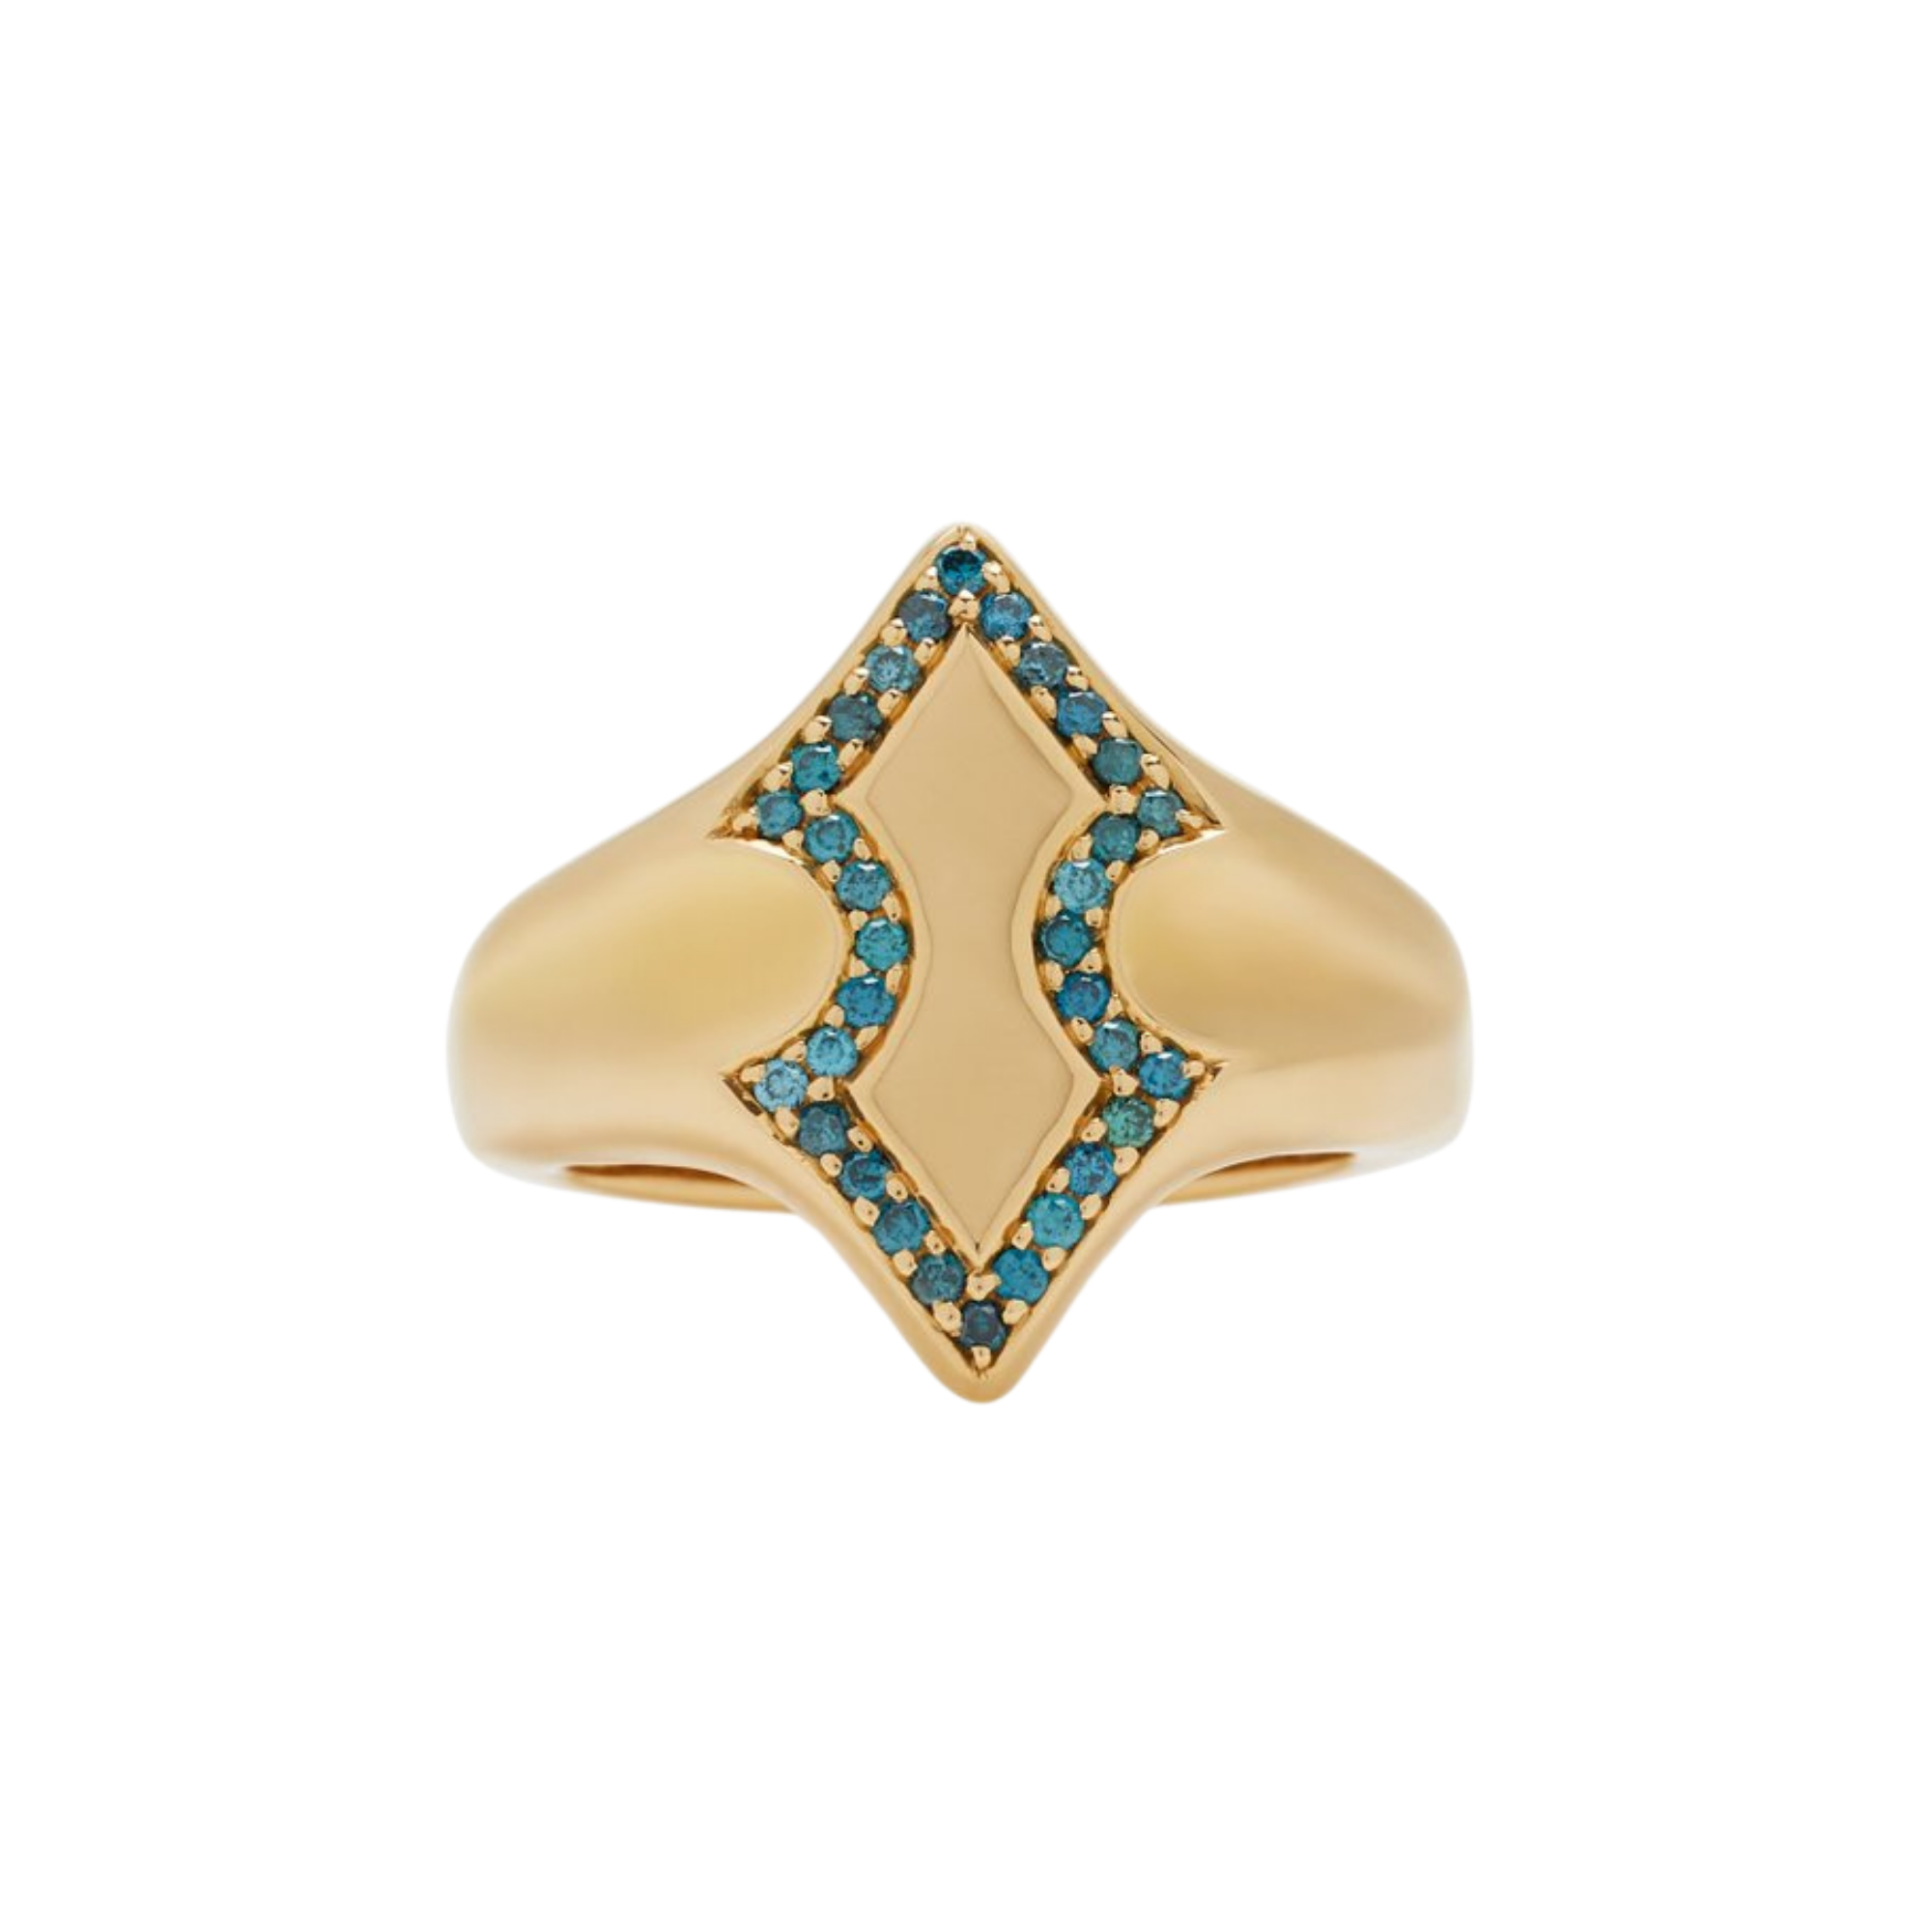 Ilana Ariel Adina 18K Gold Diamond Signet Ring, $4,600